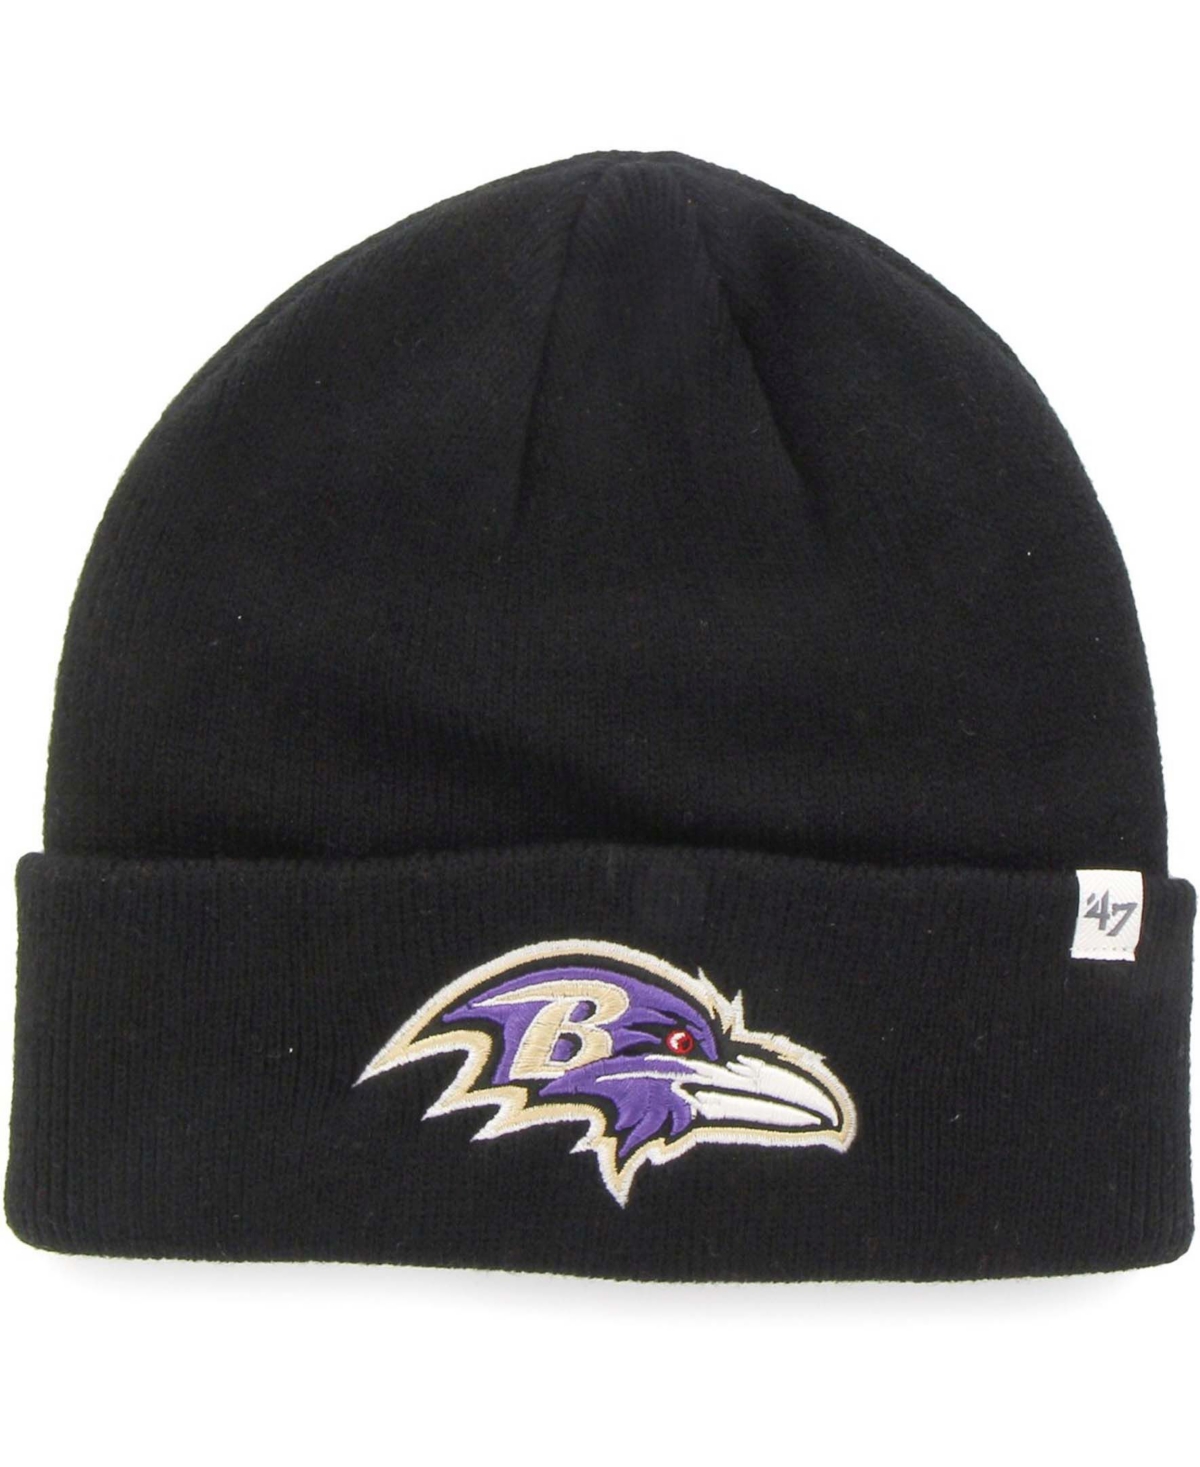 47 Brand Kids' Boys Black Baltimore Ravens Basic Cuffed Knit Hat